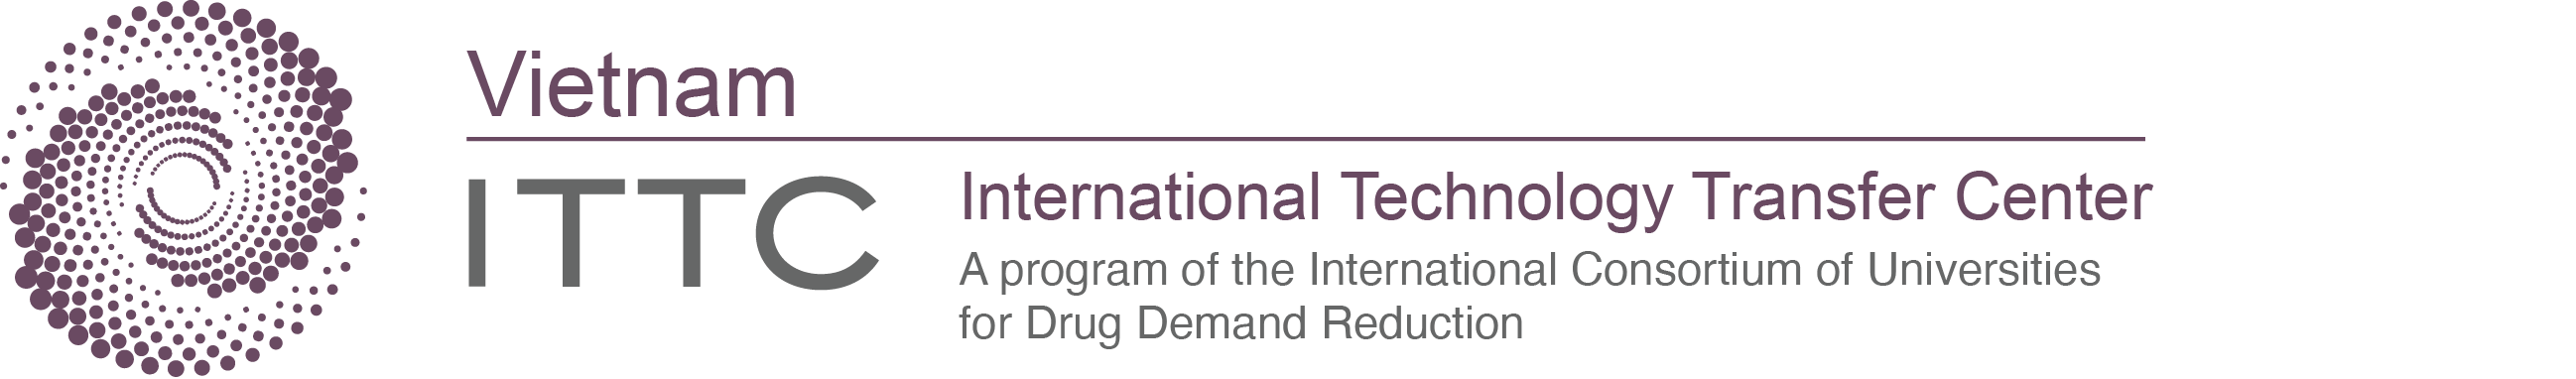 Vietnam International Technology Transfer Center Logo